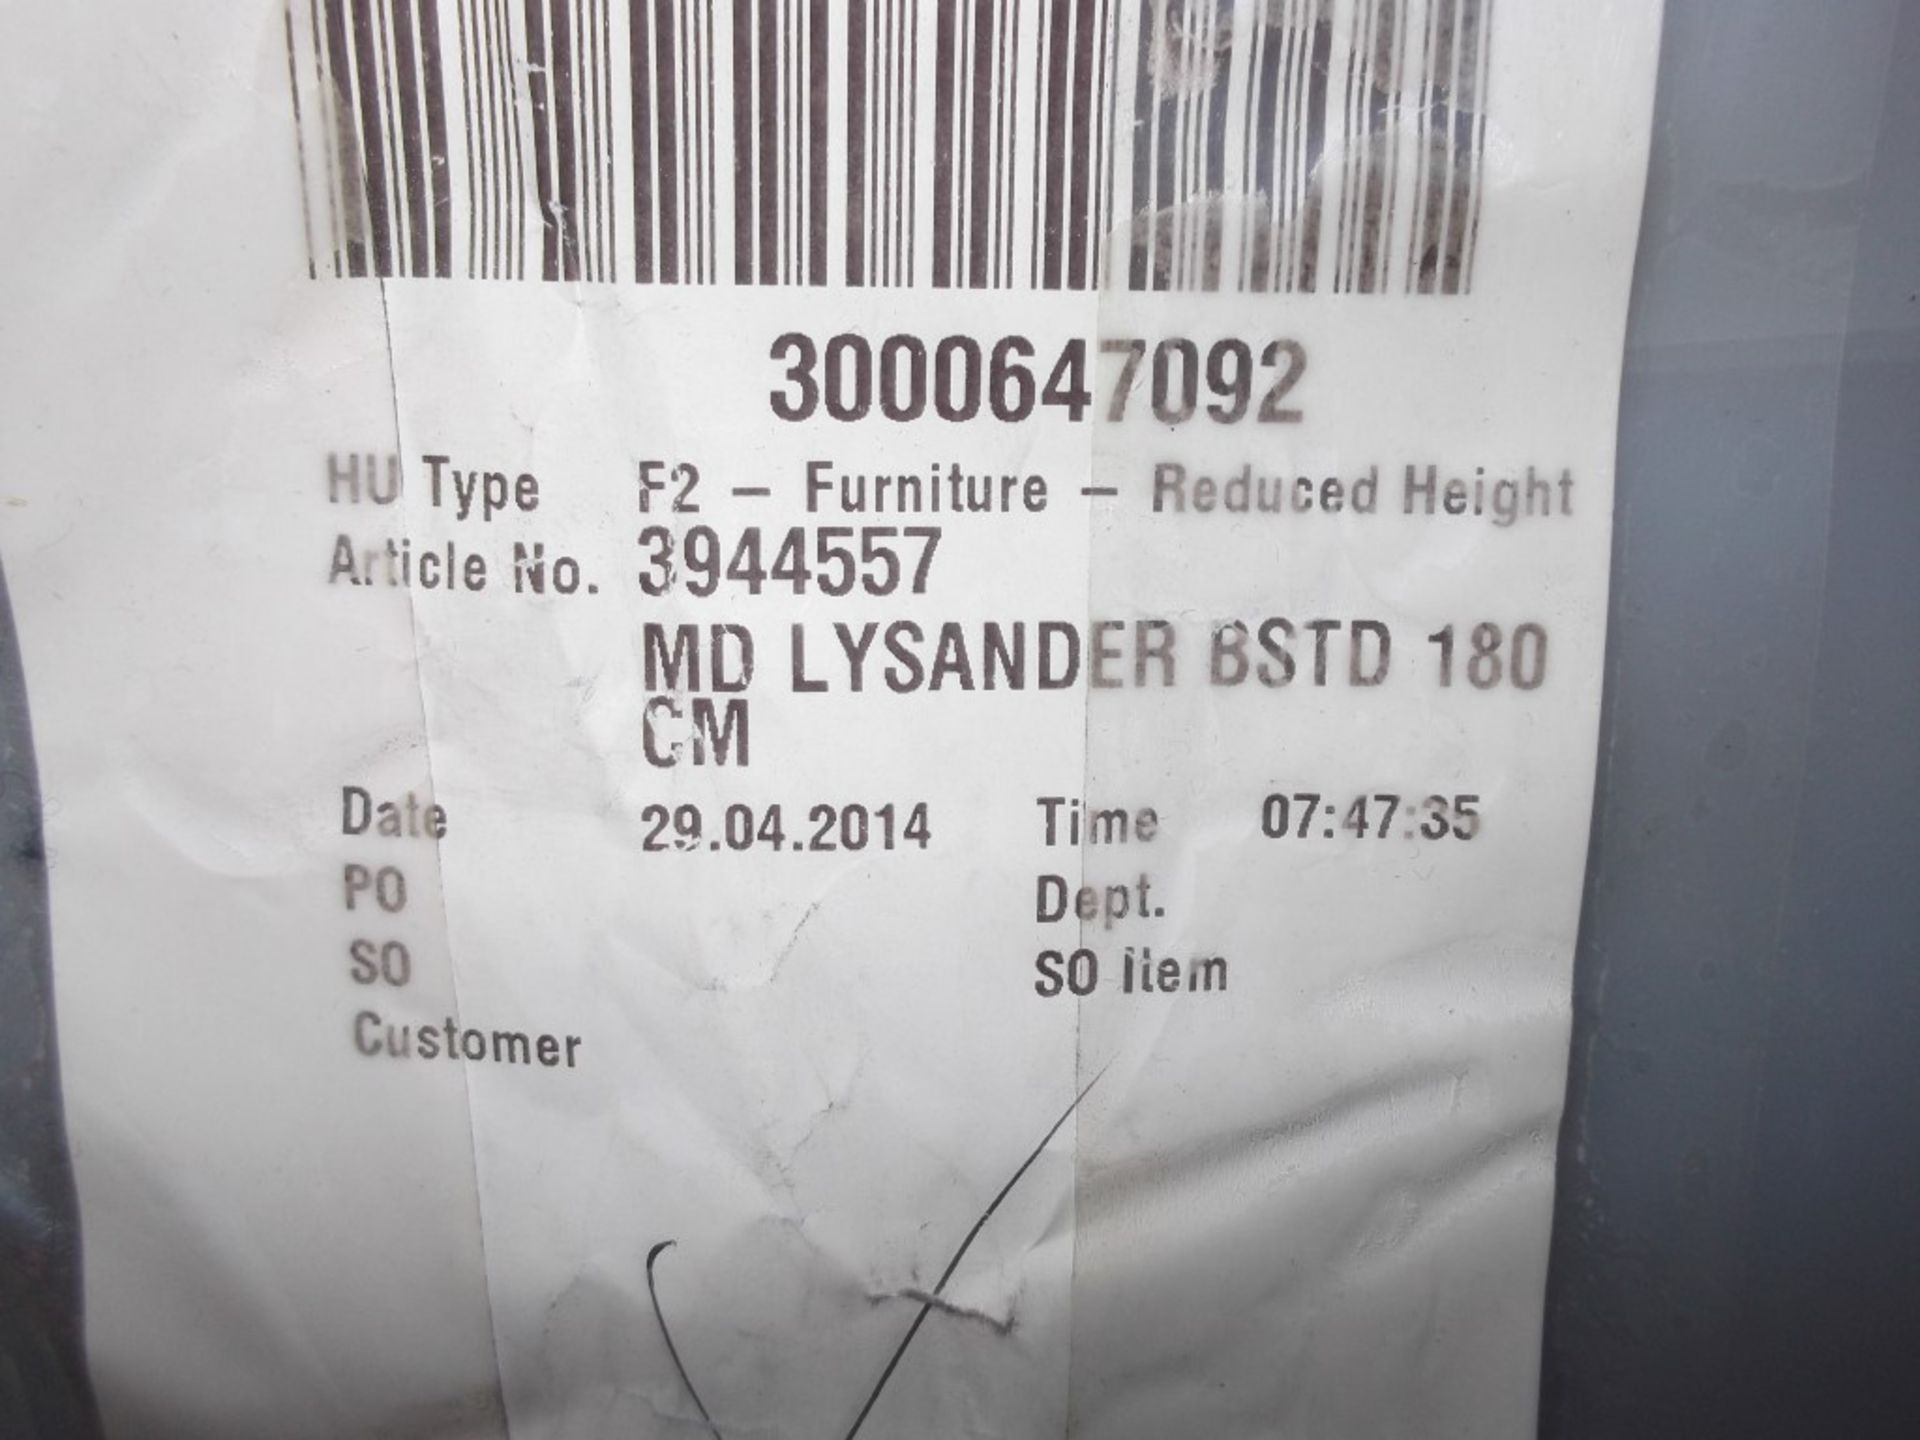 1 x MARRAM Lysander Bstd 180cm - Ref: 3944557 - CL087 - Location: Altrincham WA14 - Original - Image 10 of 11